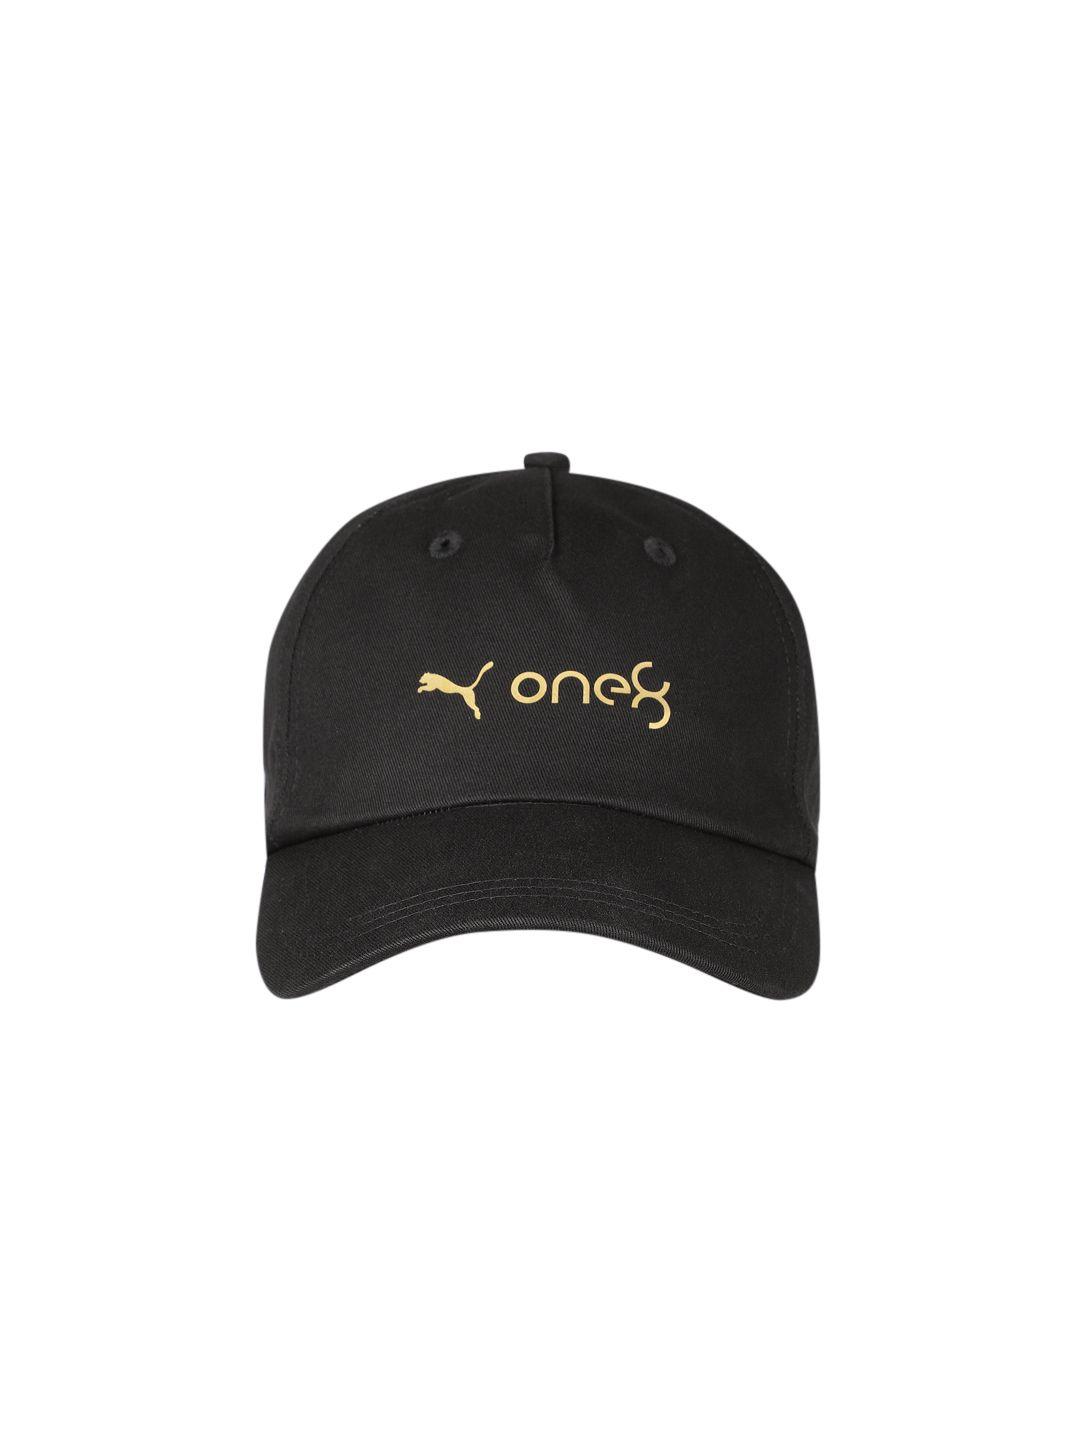 one8 x puma unisex gold foil baseball cap